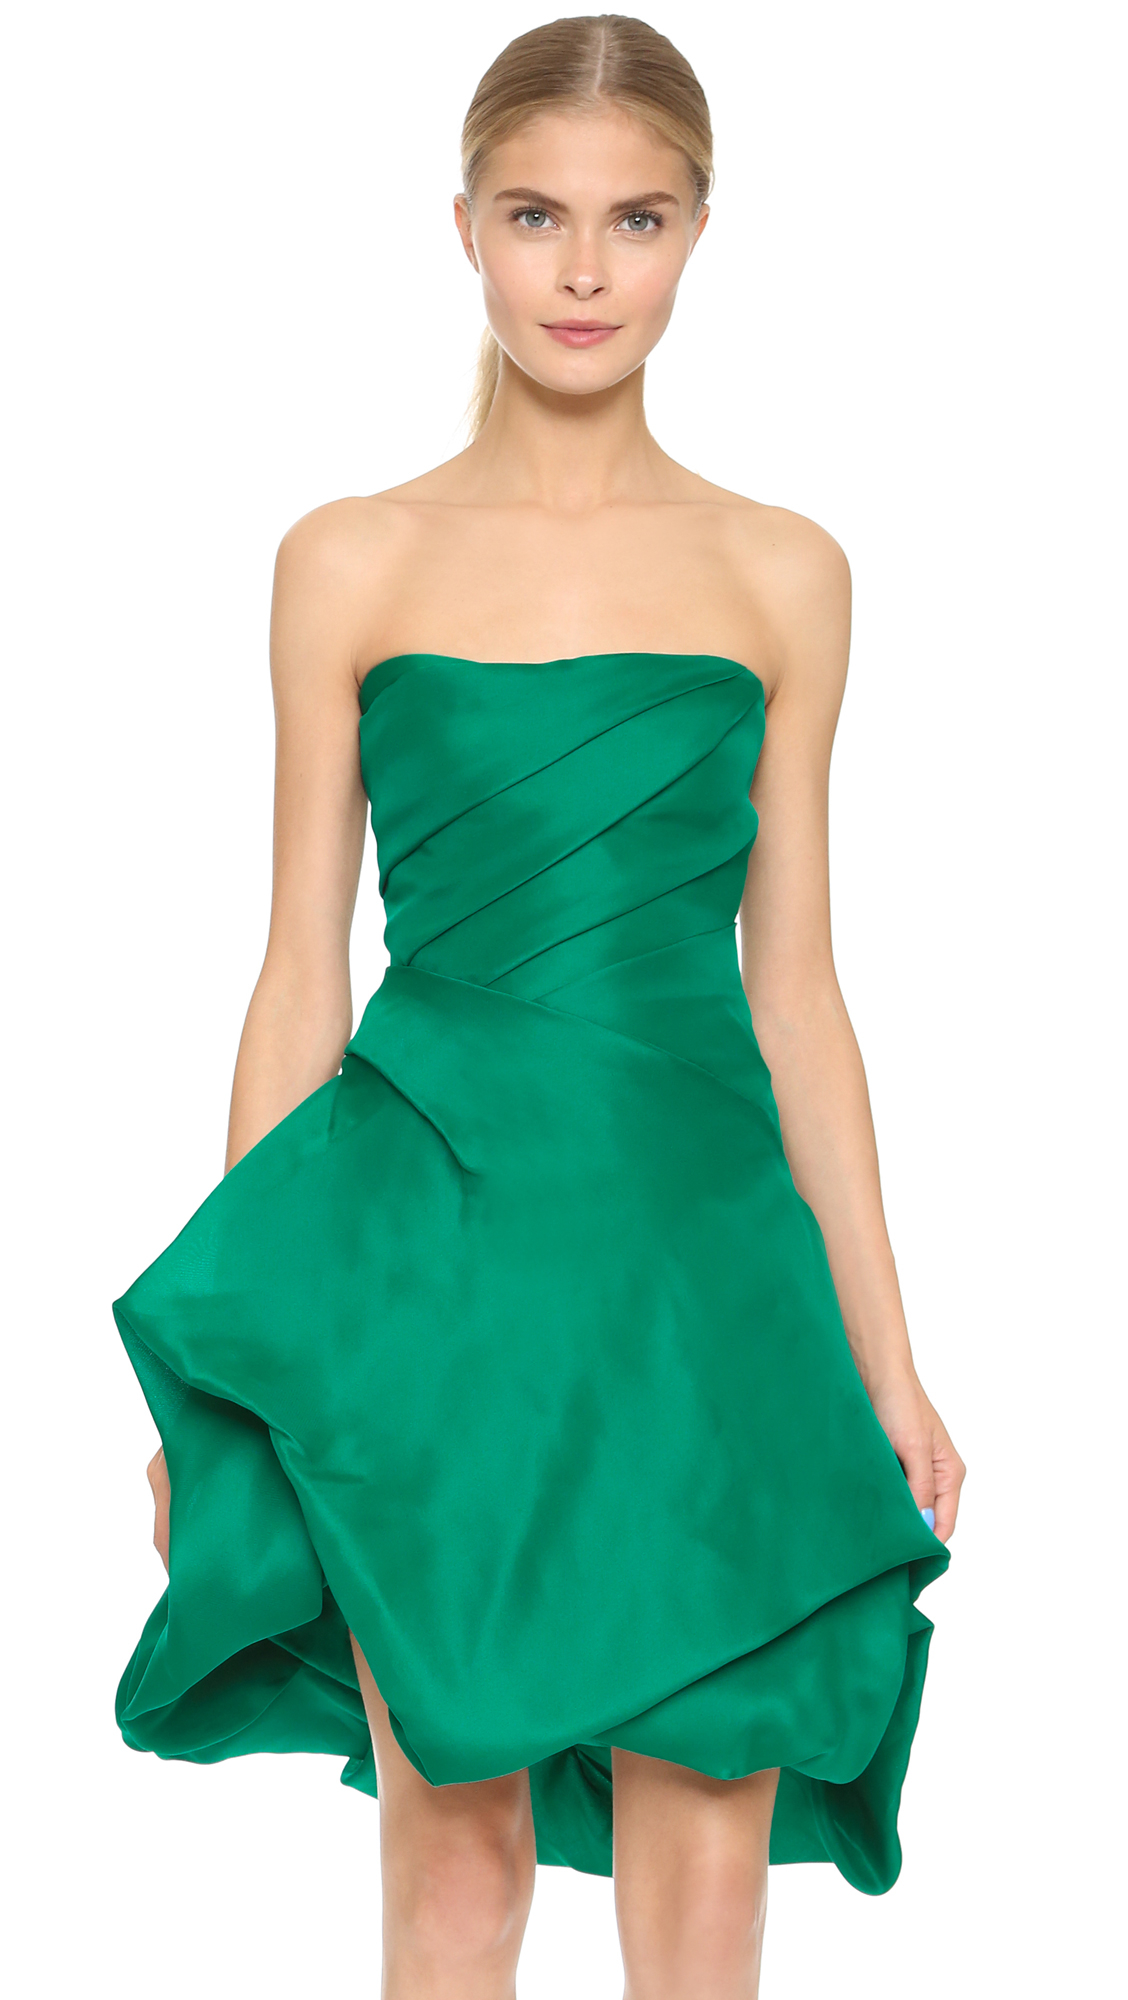 Monique lhuillier Strapless Dress With Bubble Hem - Emerald in ...